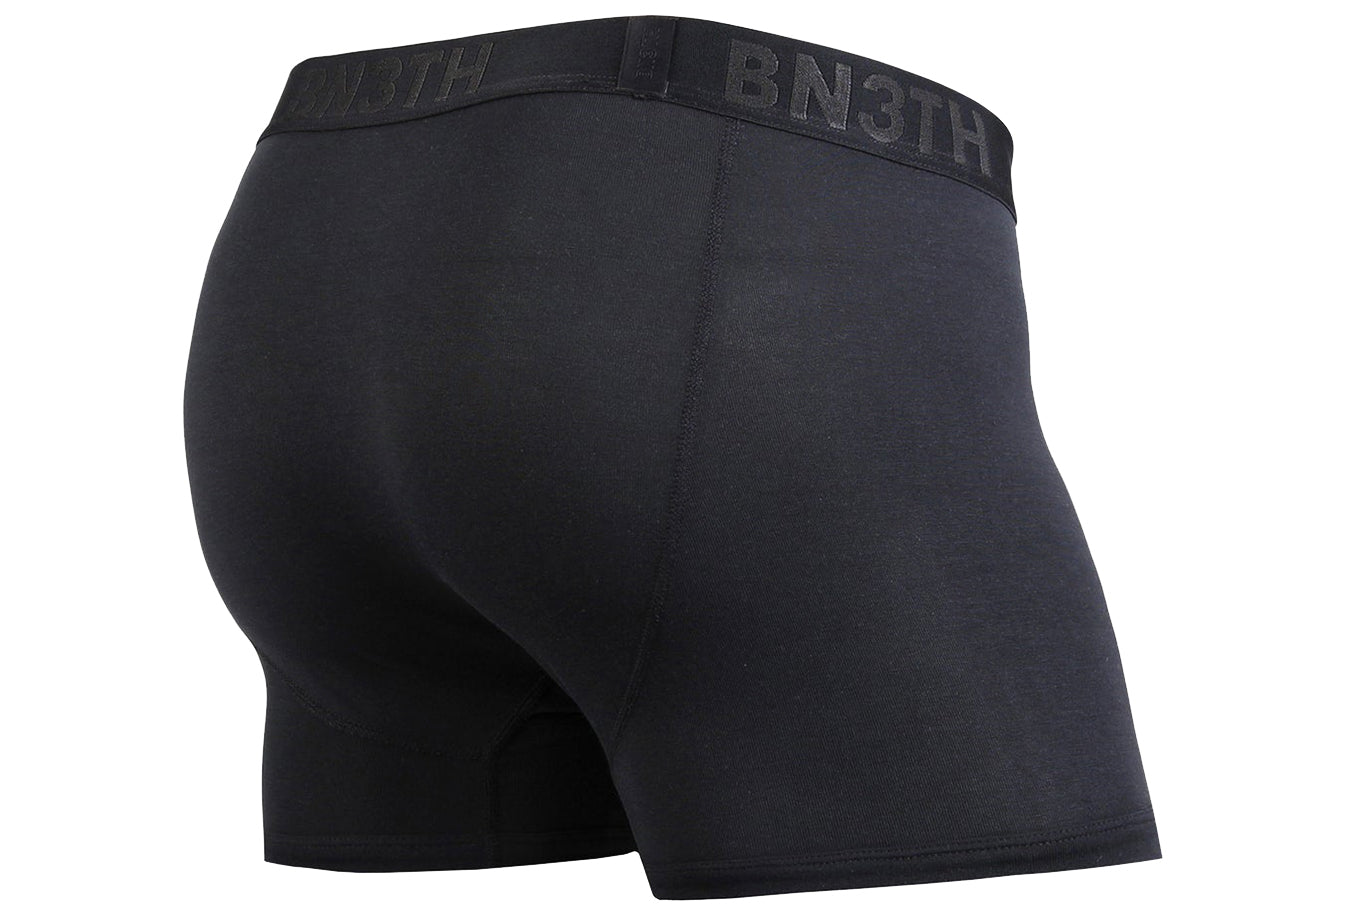 Classic Trunk: Black 2 Pack  BN3TH Underwear –